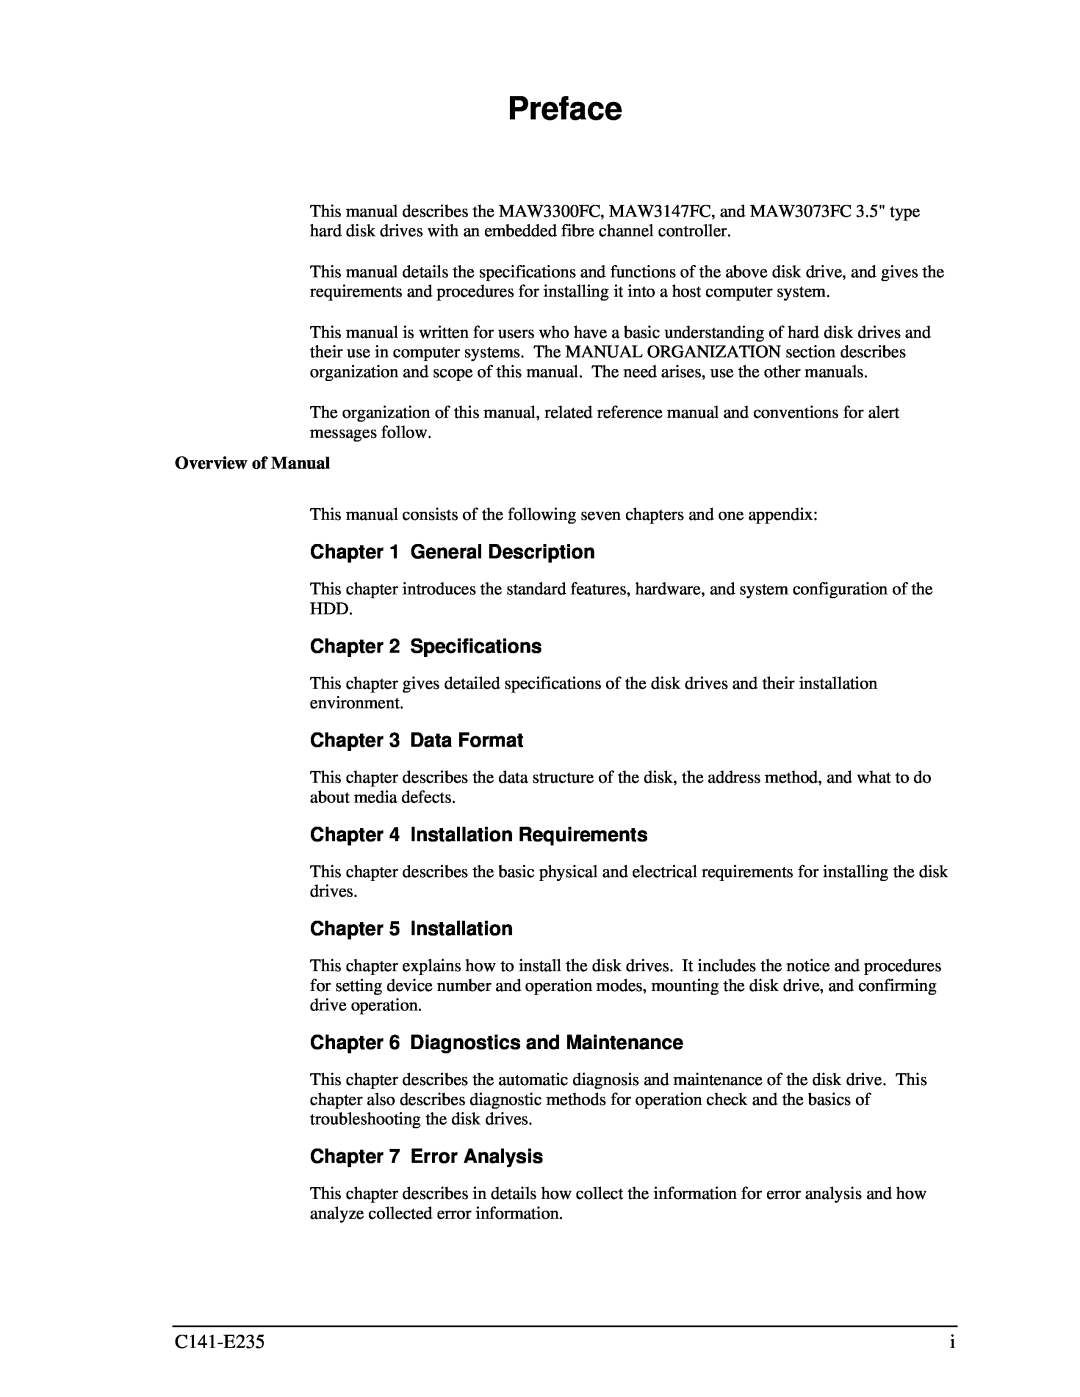 Fujitsu MAW3147FC Preface, General Description, Specifications, Data Format, Installation Requirements, Error Analysis 